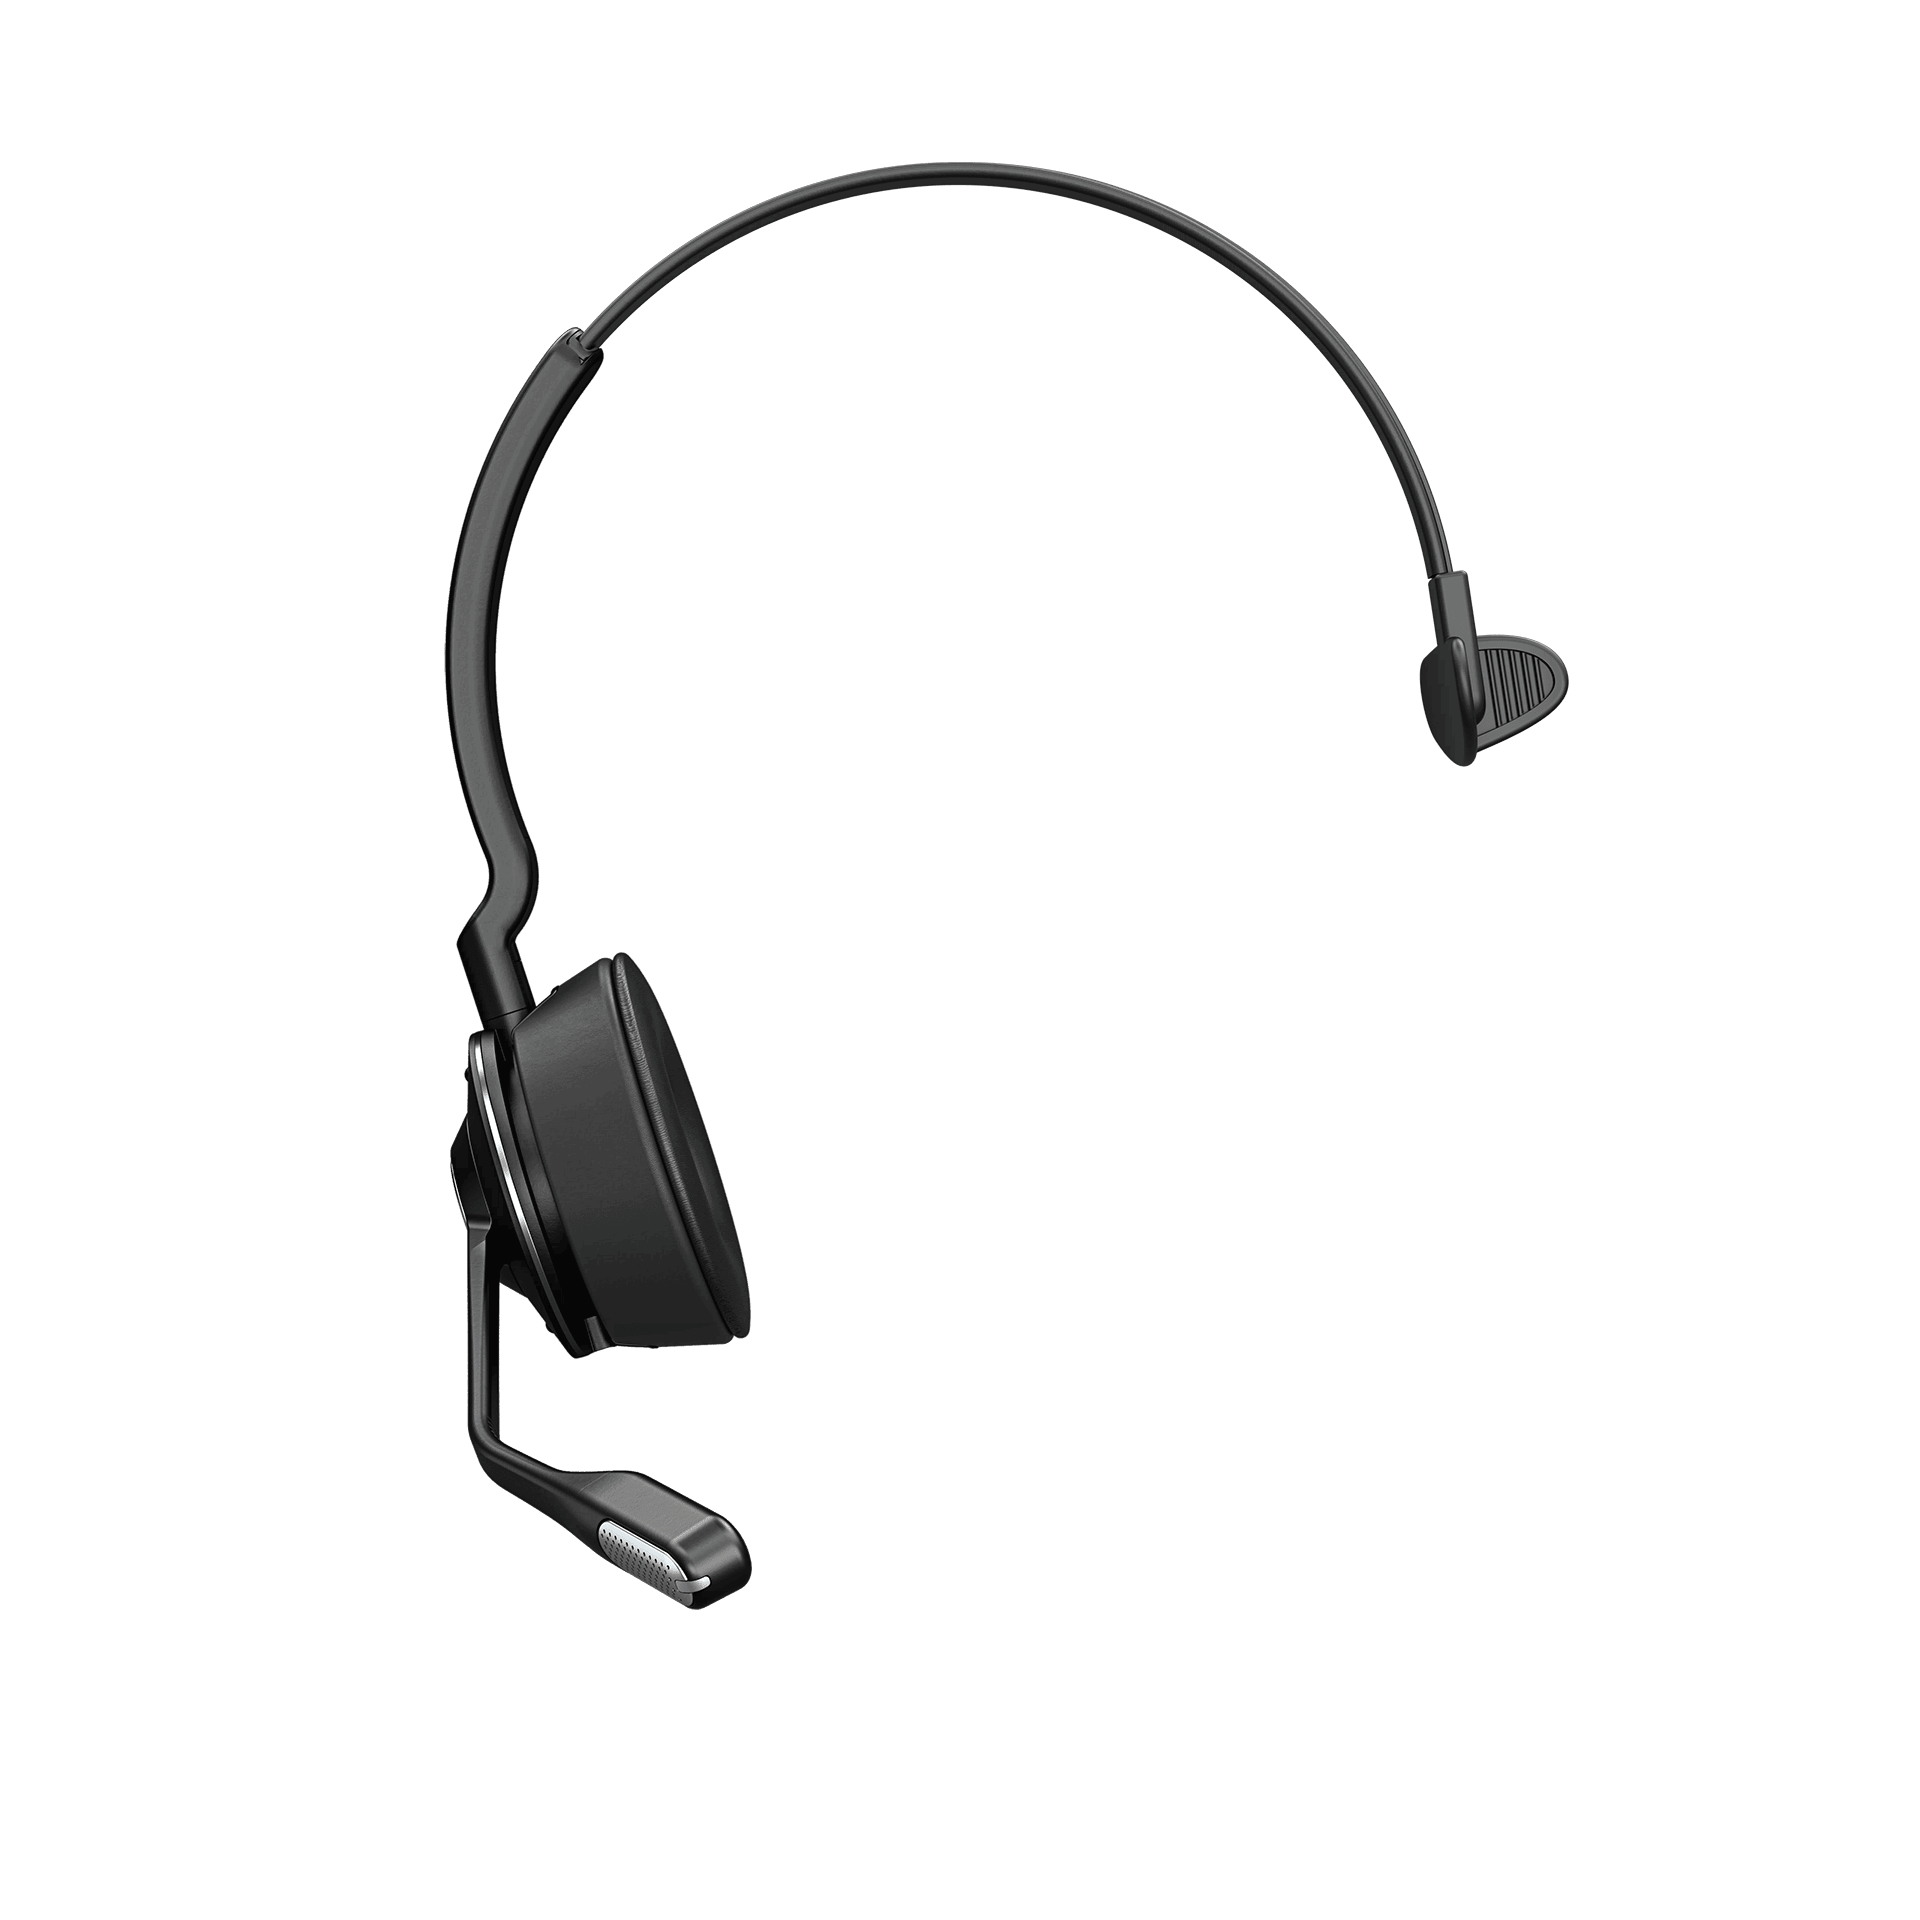 Jabra Engage 65 Mono Wireless Headset